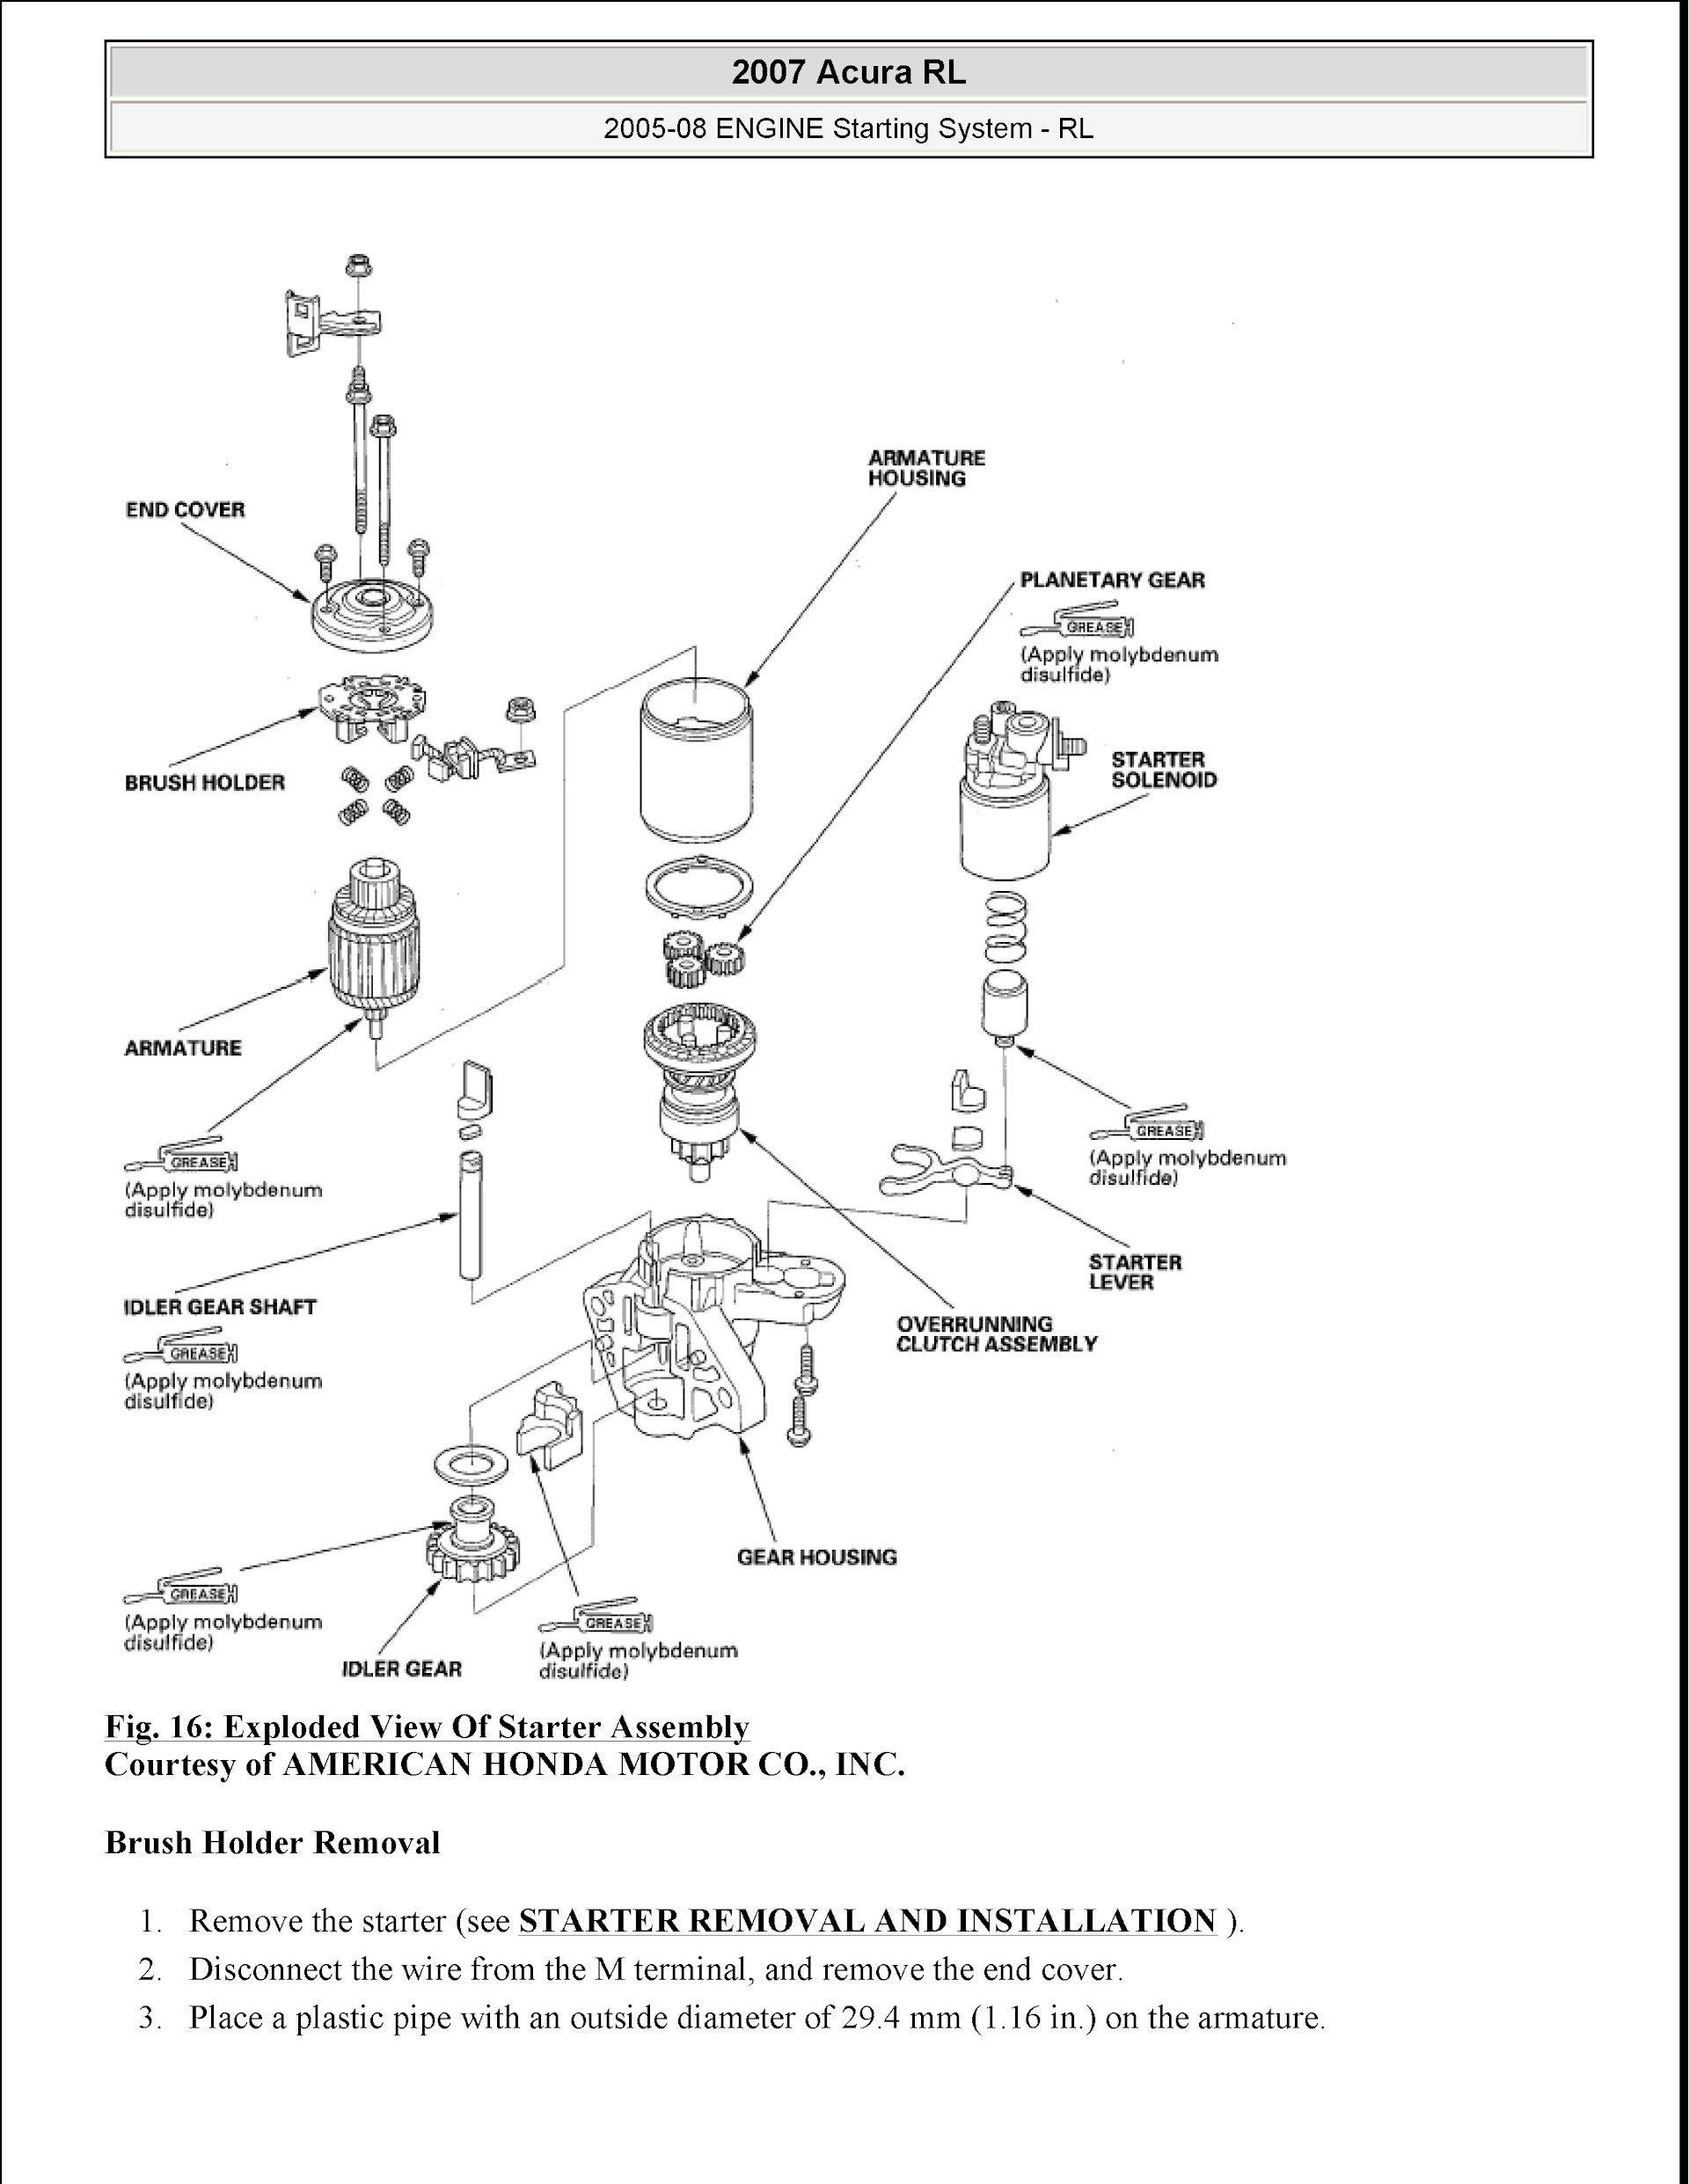 2008 Acura RL Repair Manual, Engine Starting System